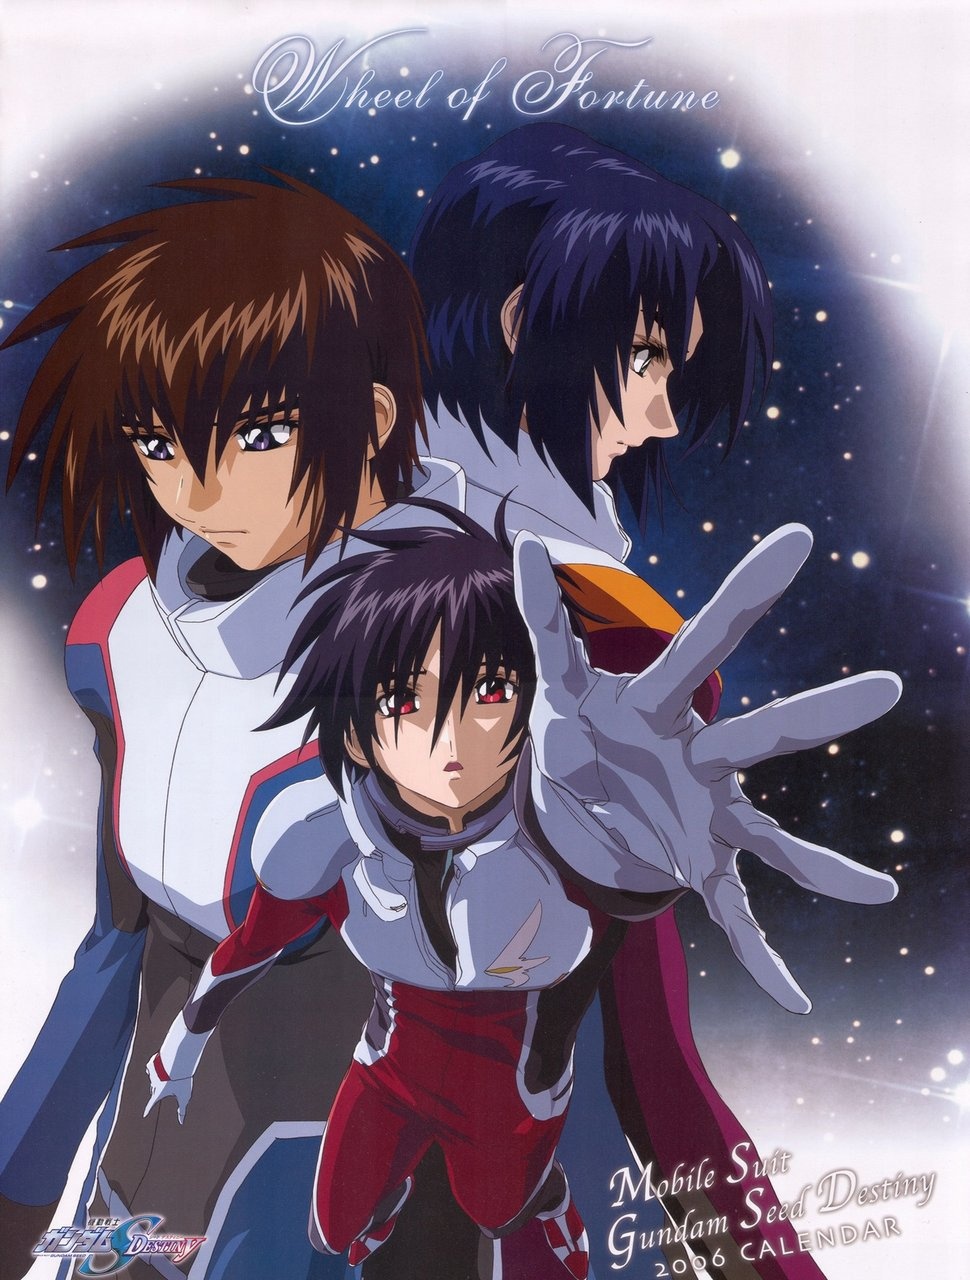 Calendario Mobile Suit Gundam Seed Destiny 2006 en Mxima Calidad